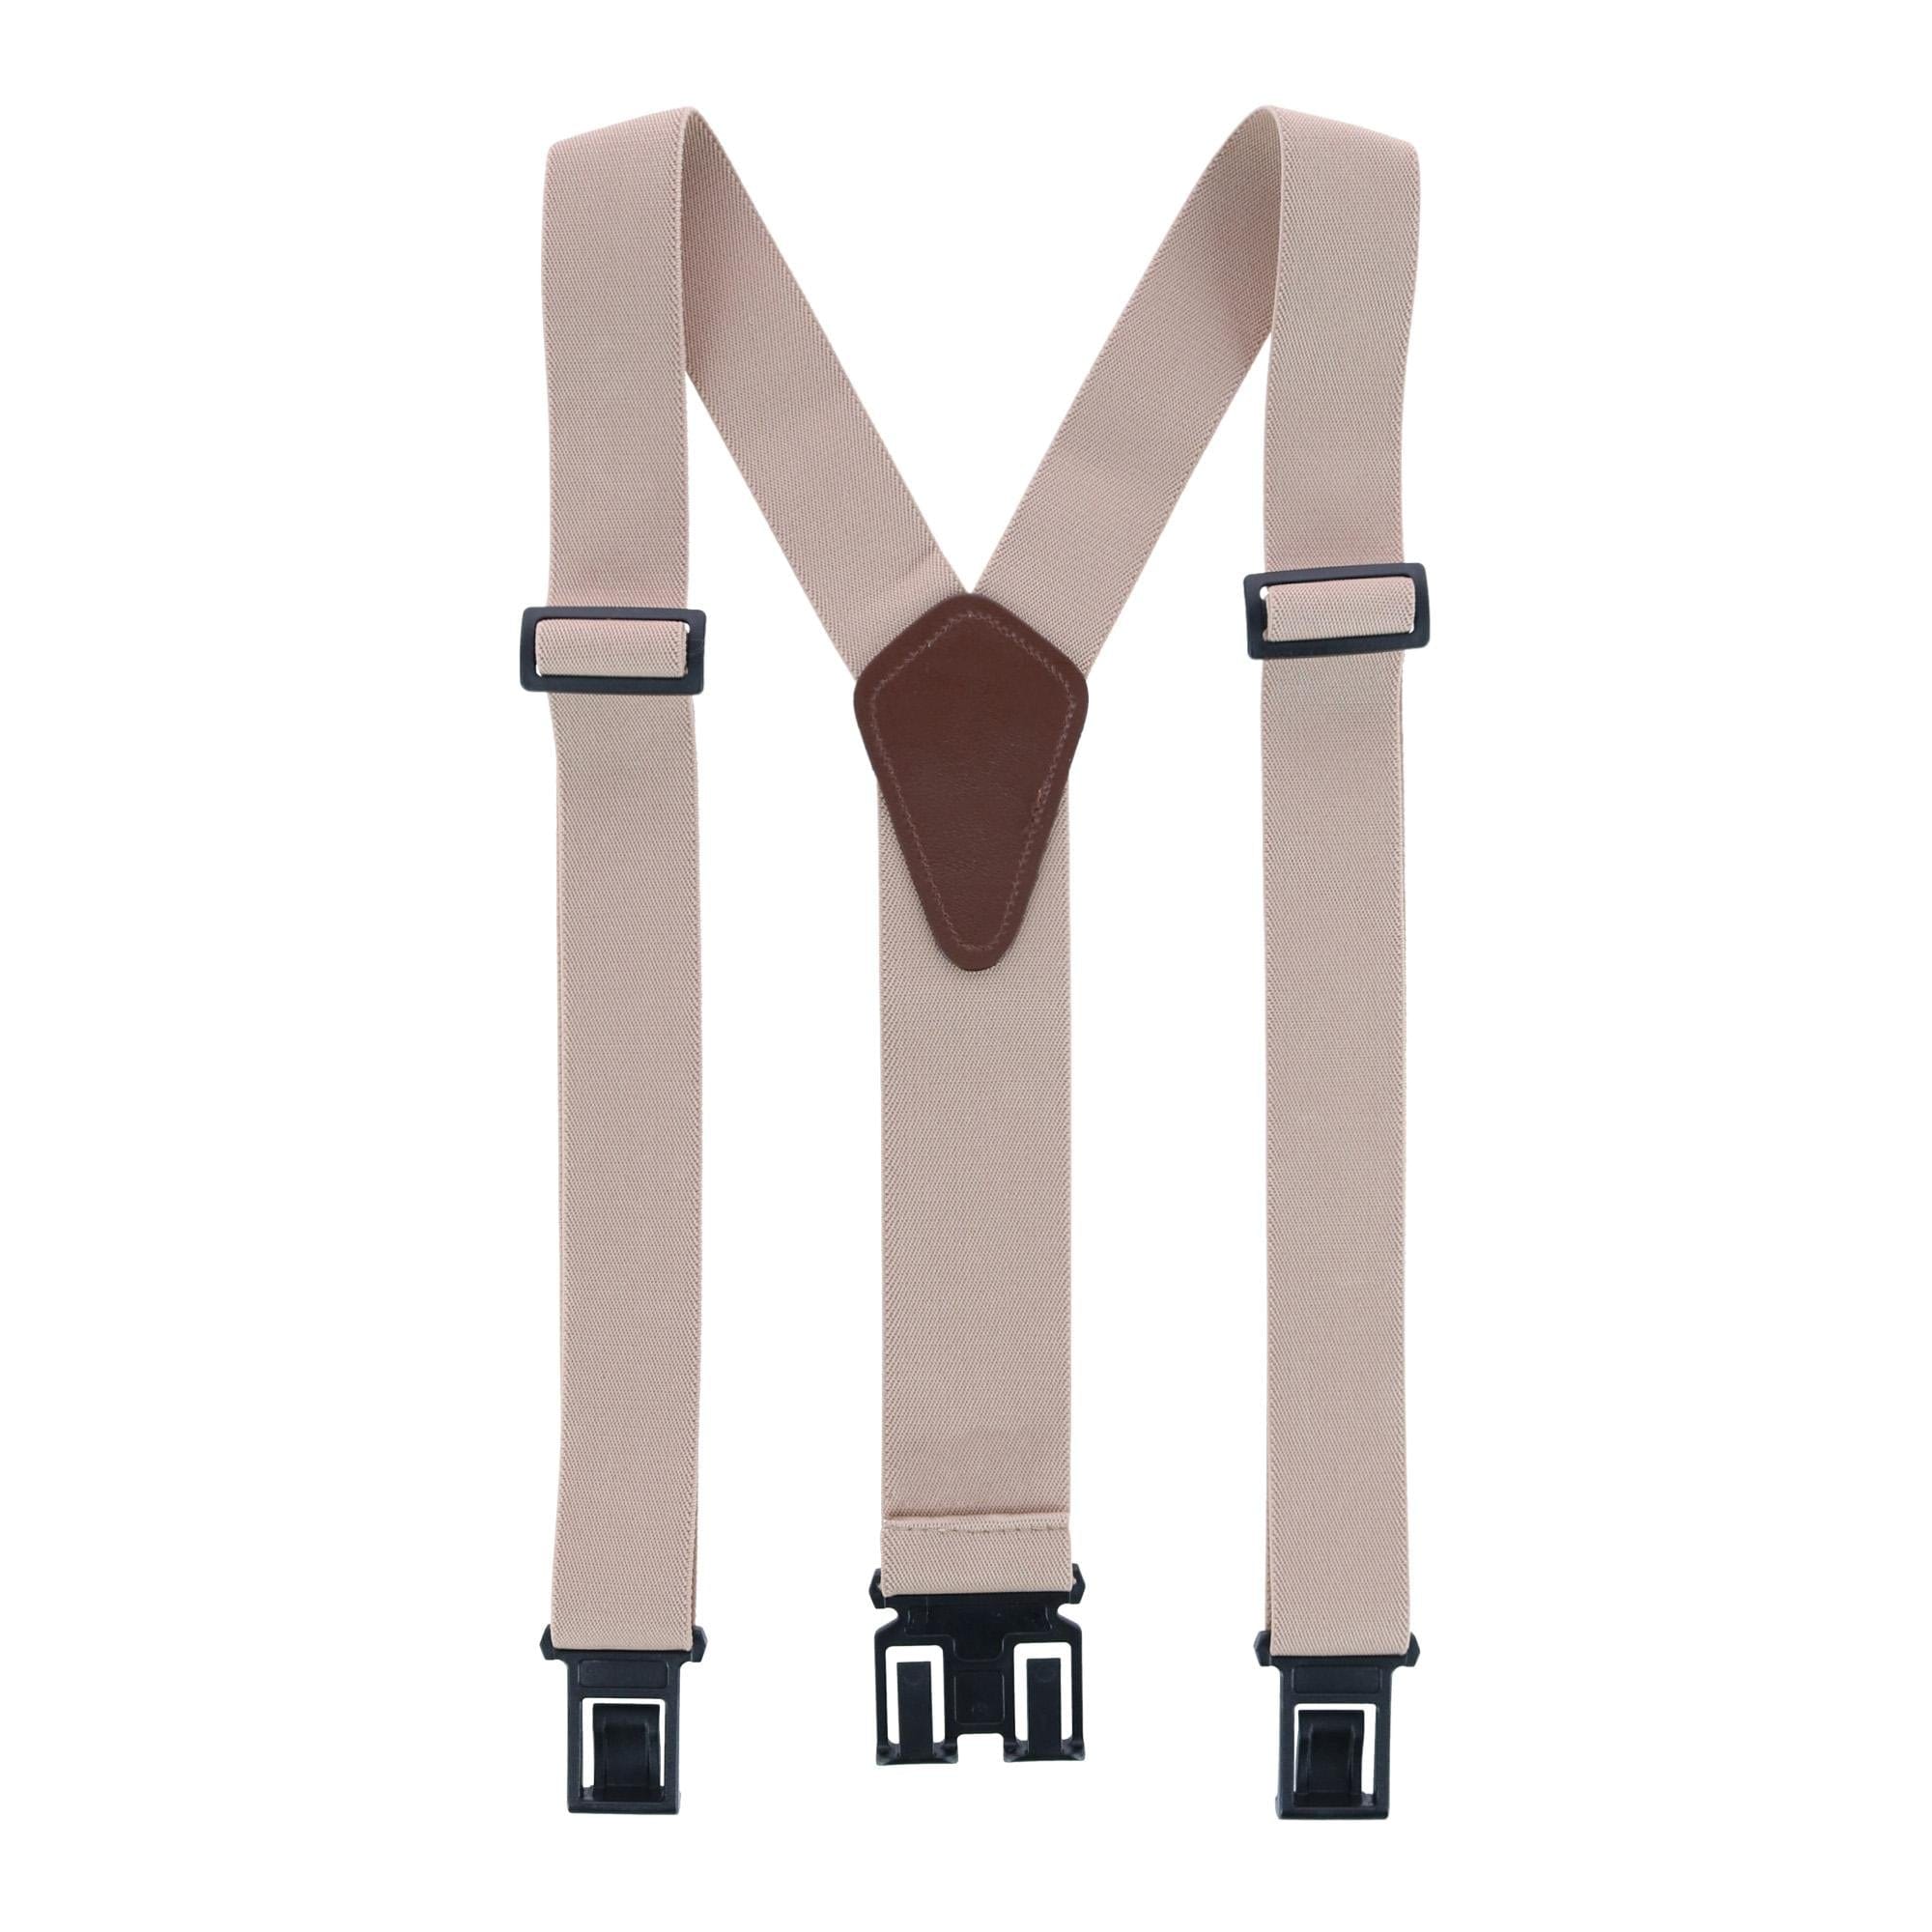 Solid Suspenders